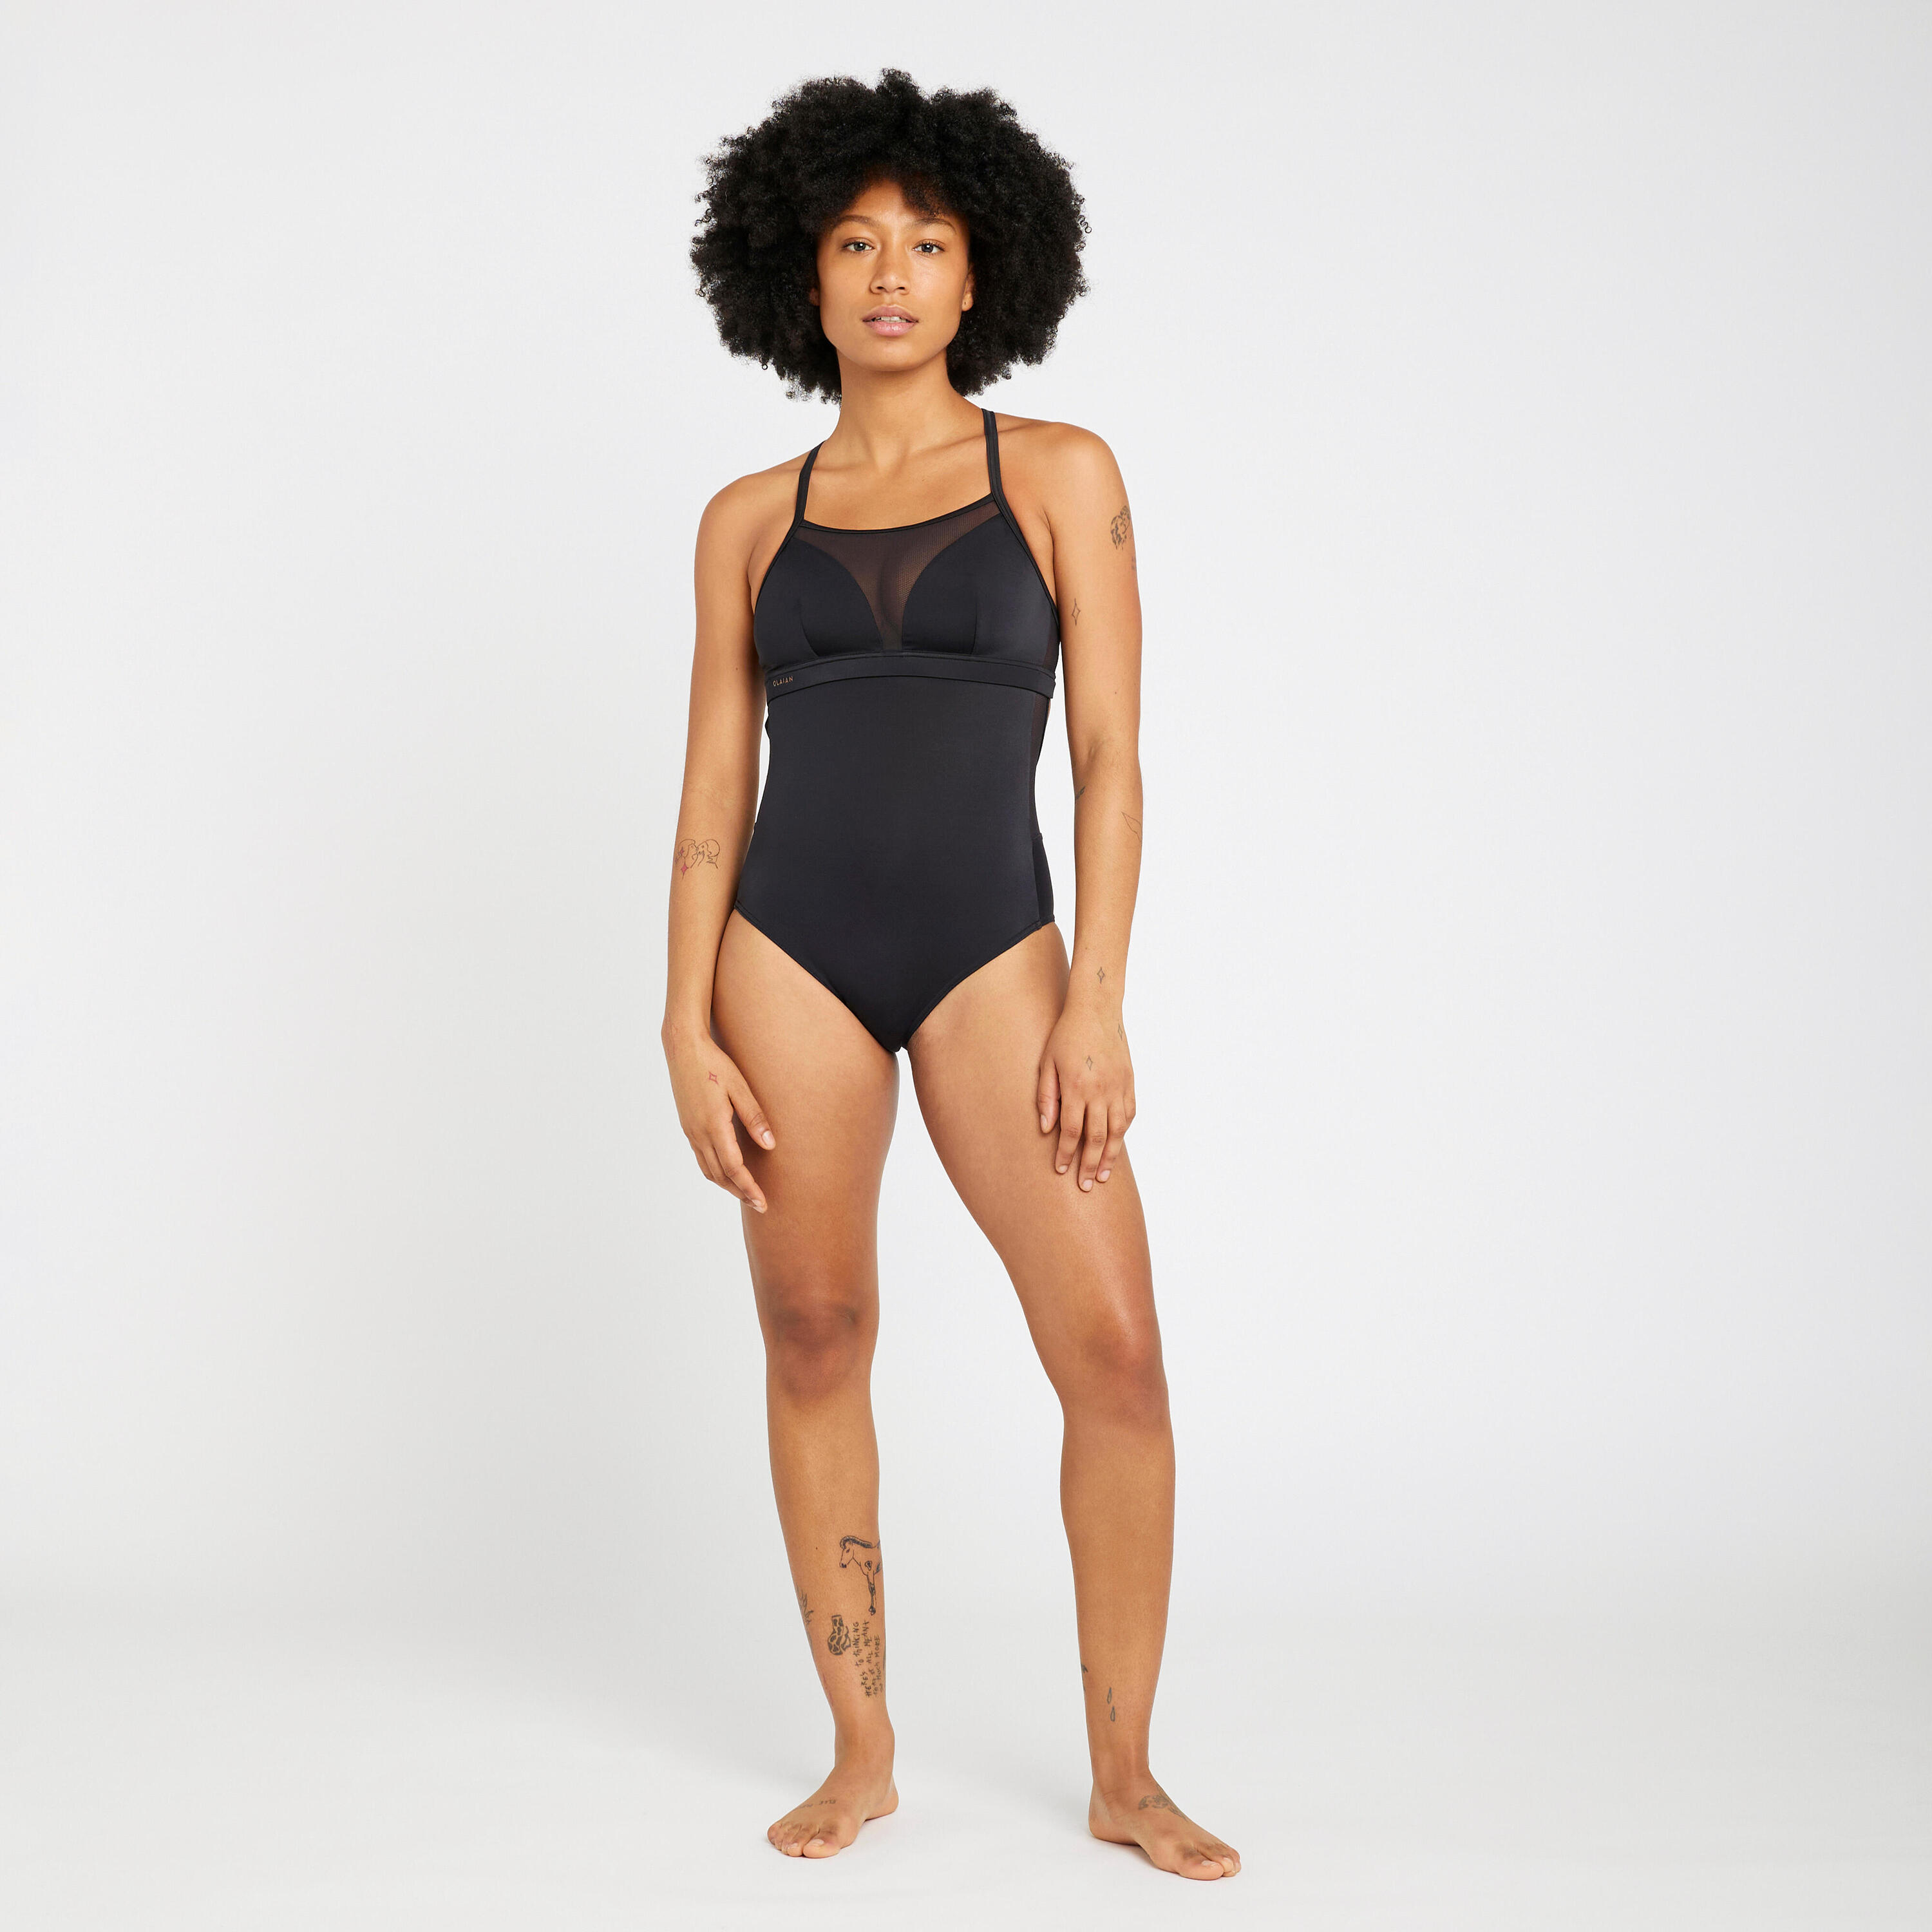 Women's one-piece swimsuit - Elise black 6/6